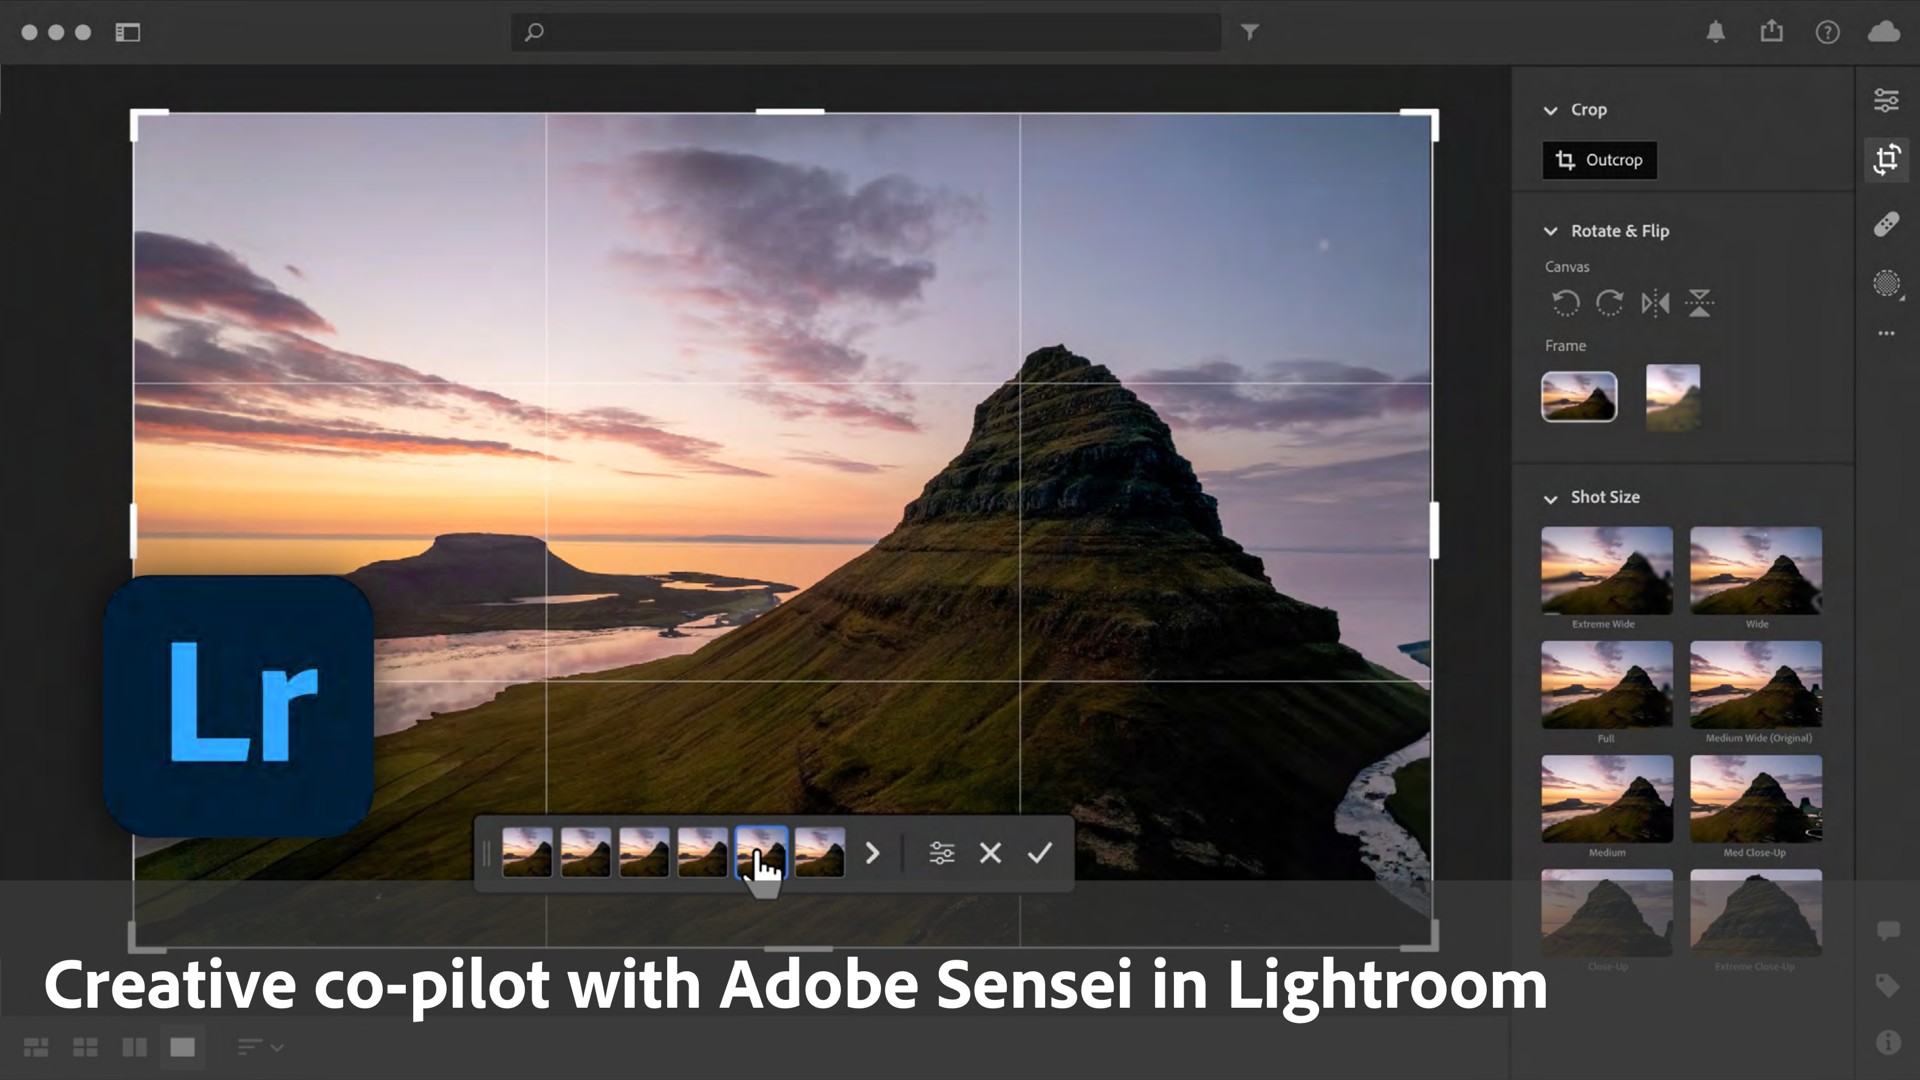 creative pilot with adobe in lightroom | Adobe